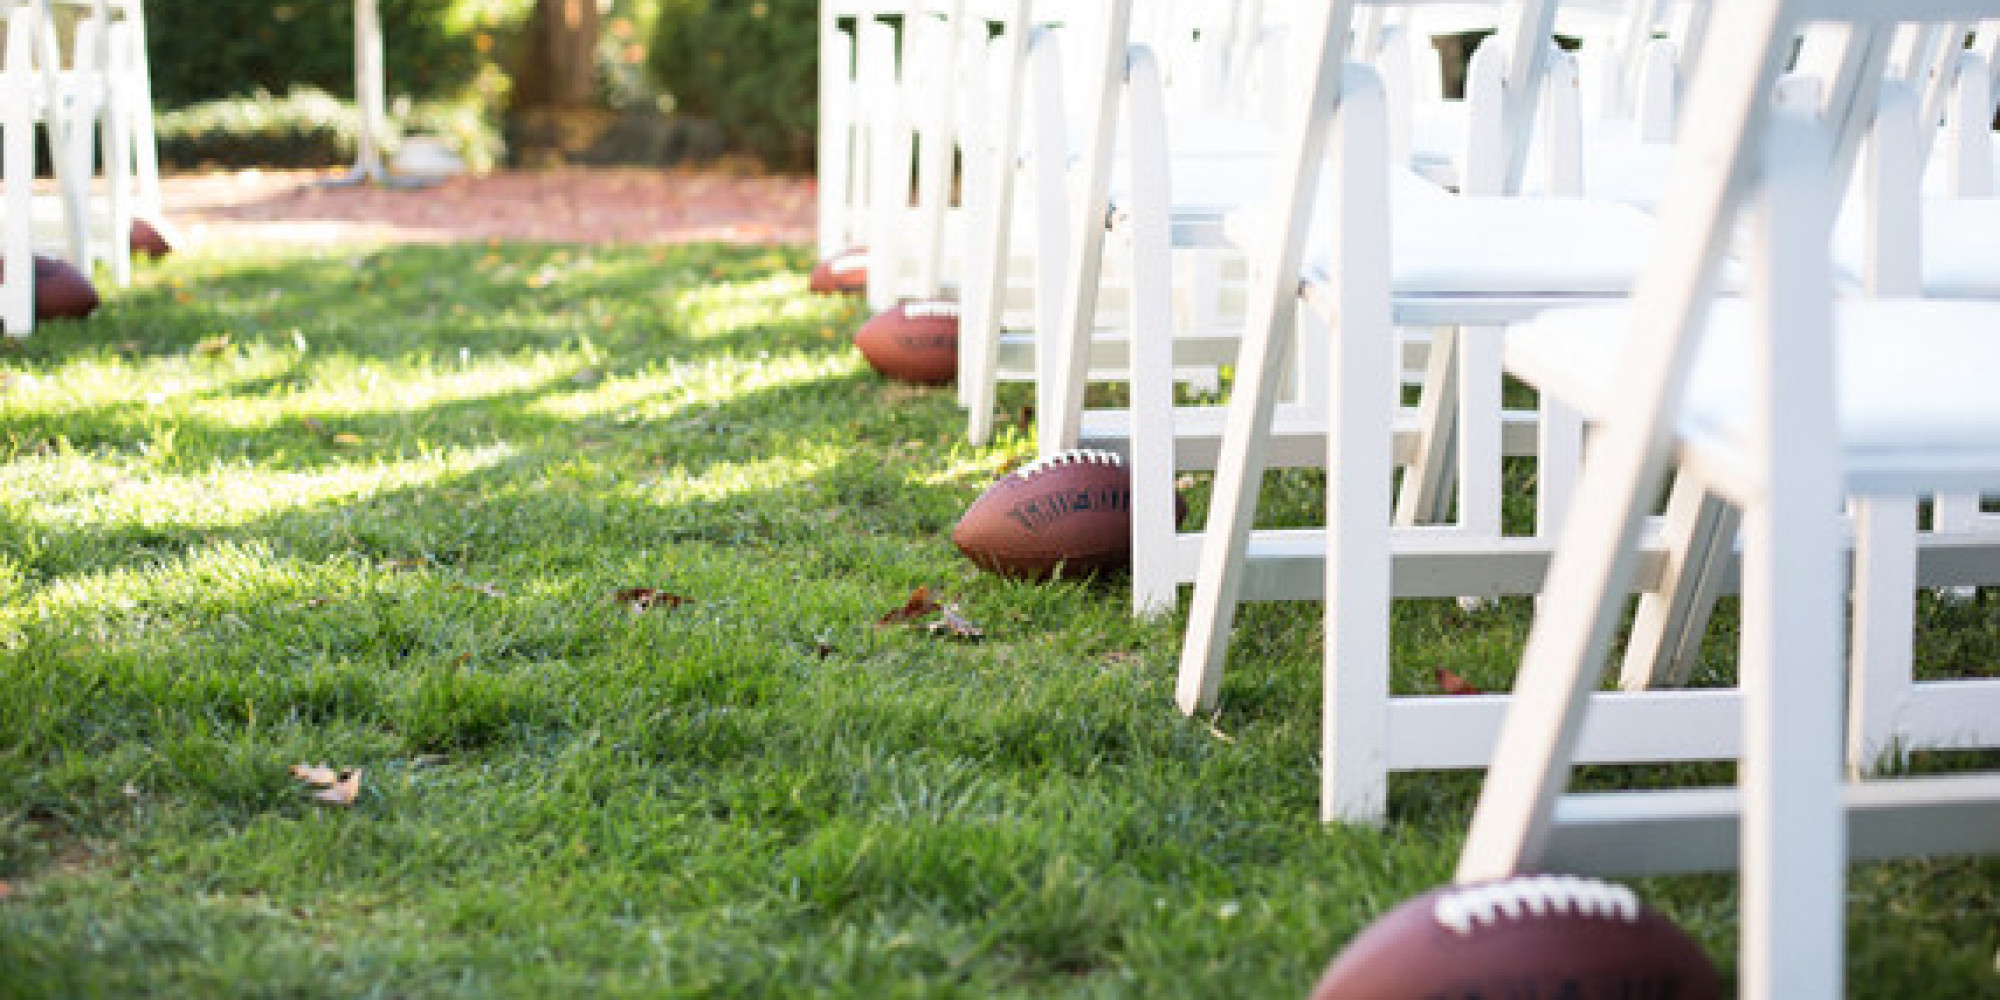 Super Bowl weddings